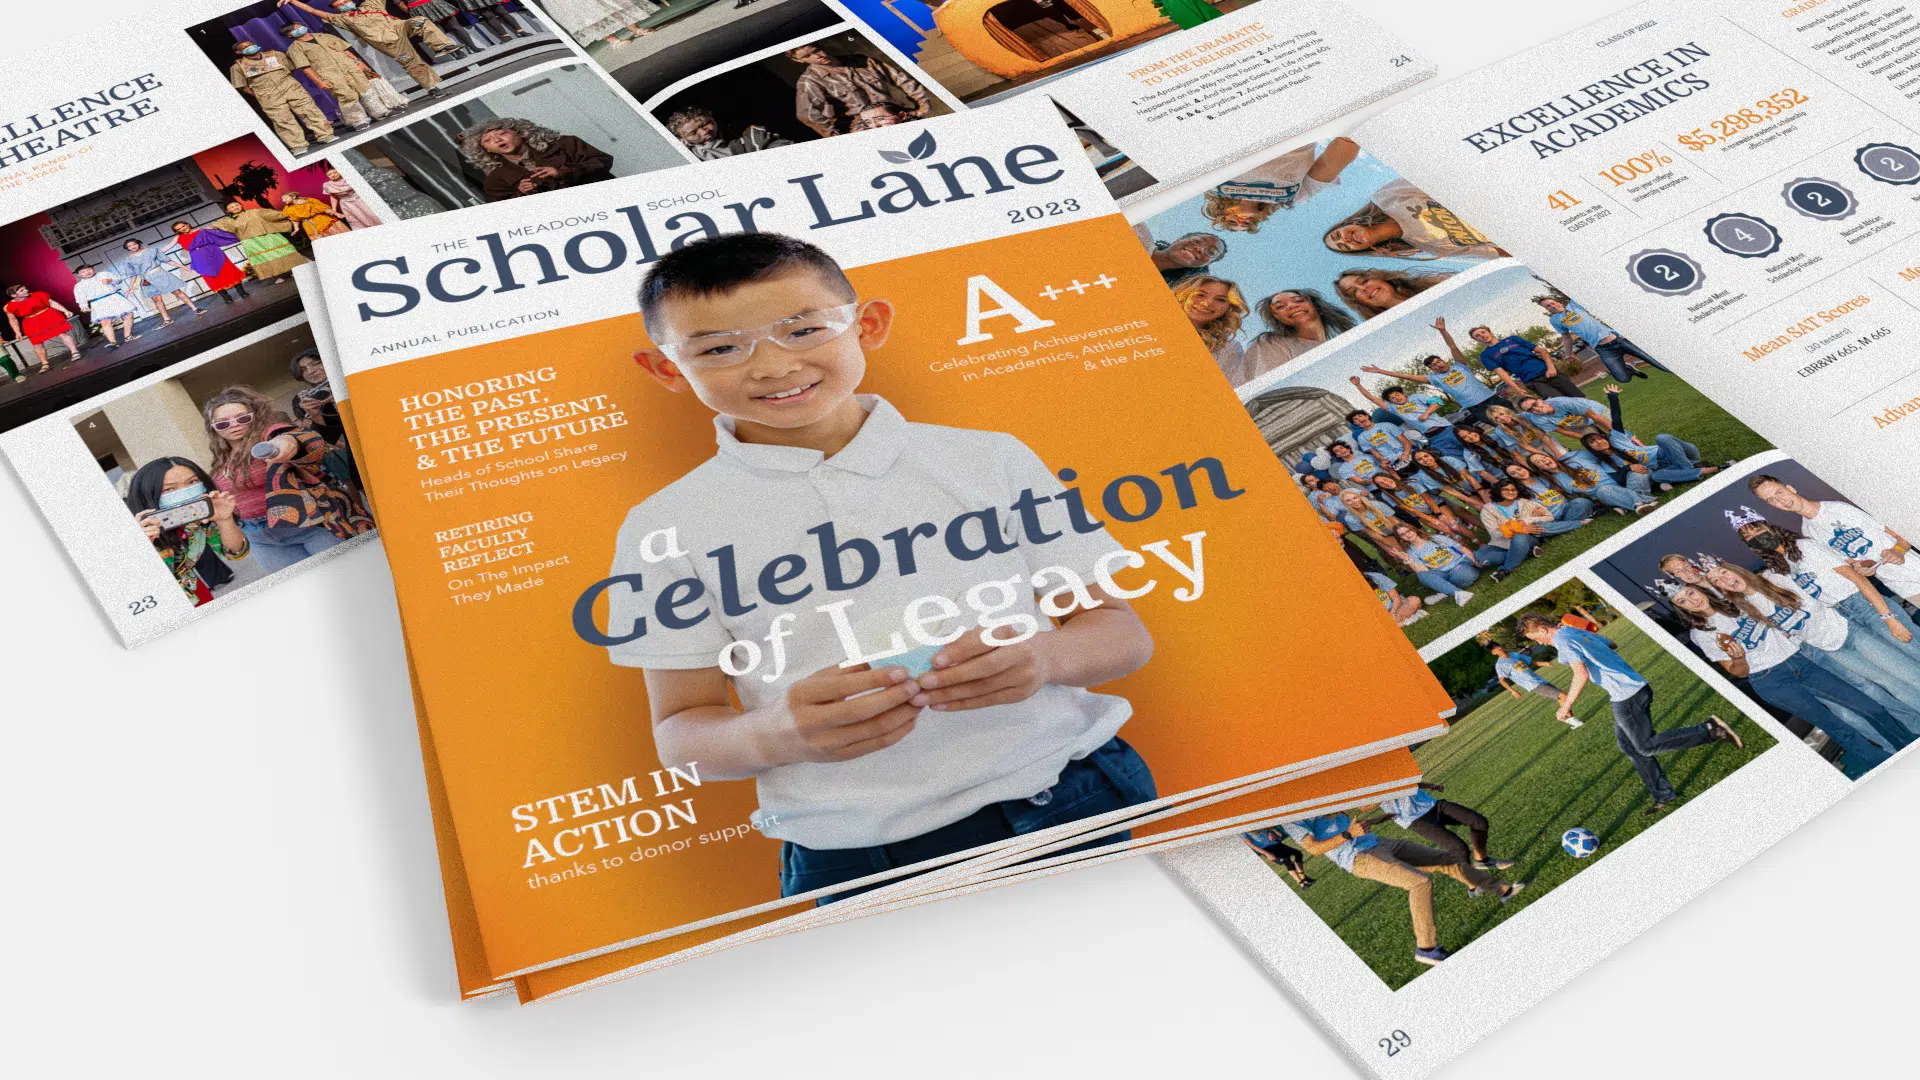 Scholar Lane publication cover and inside images